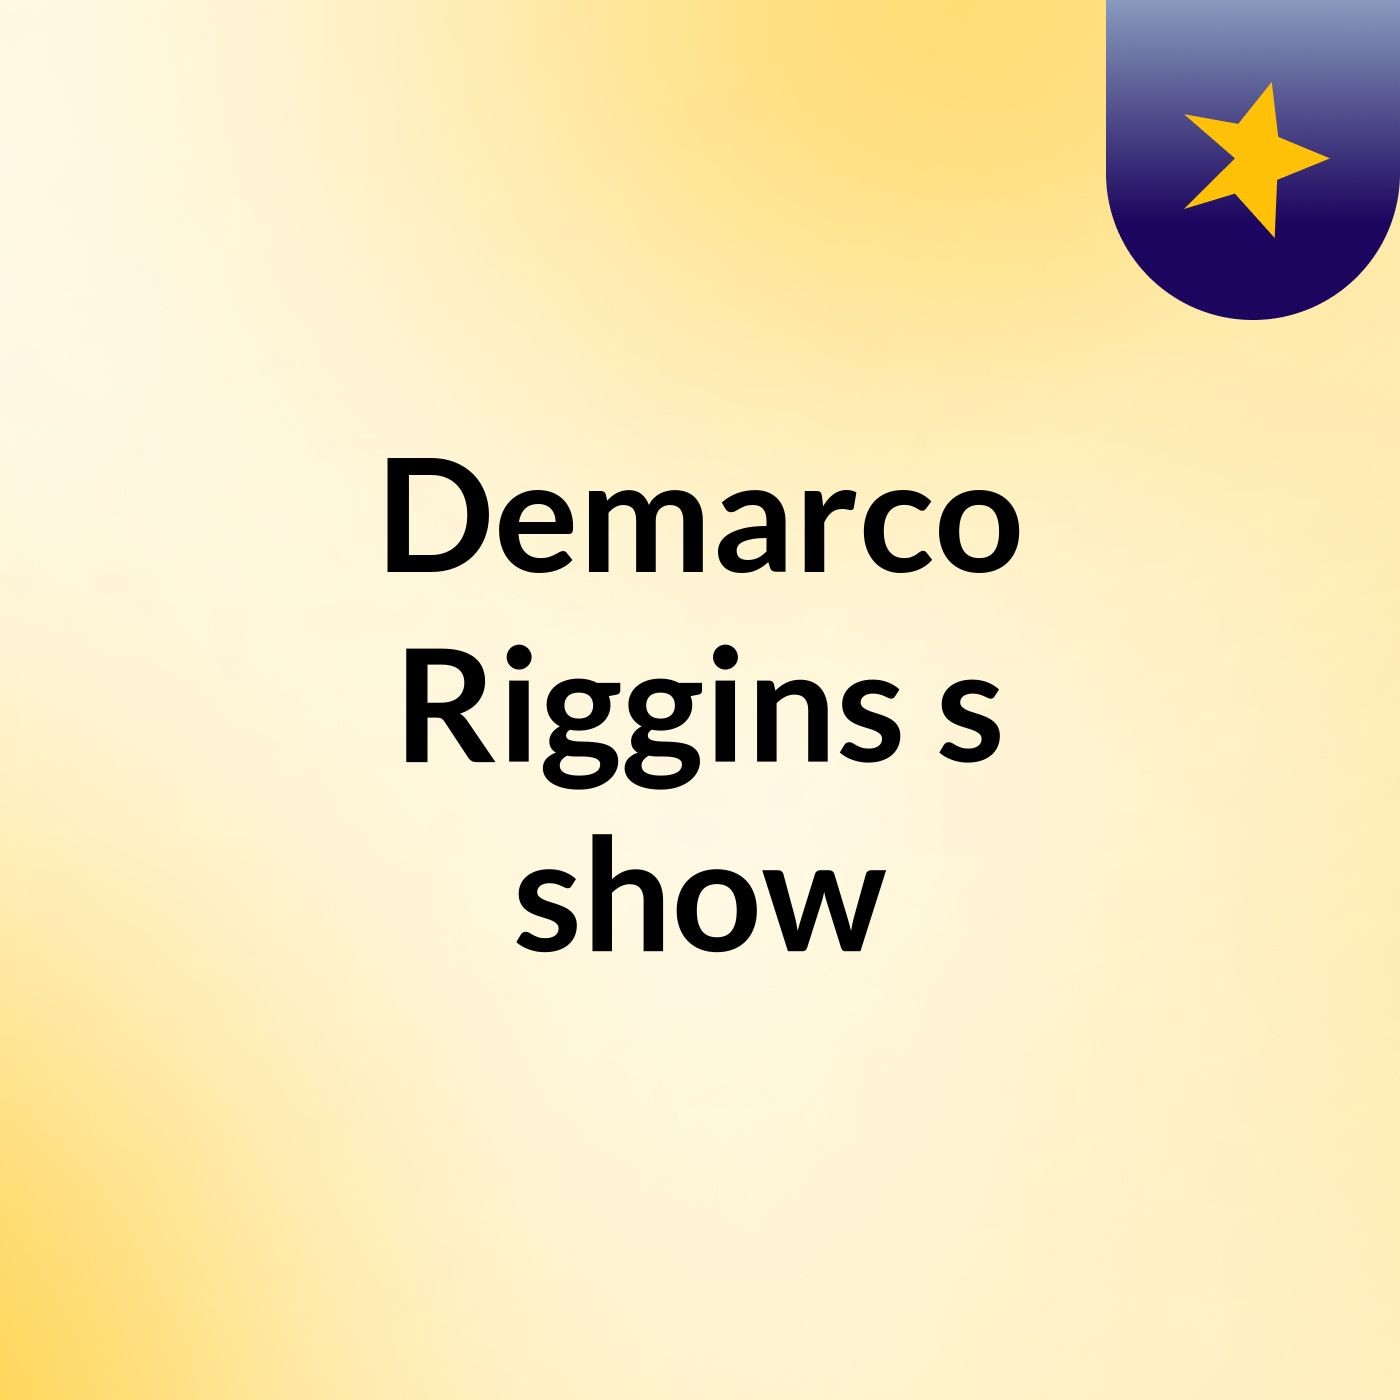 Episode 4 - Demarco Riggins's show